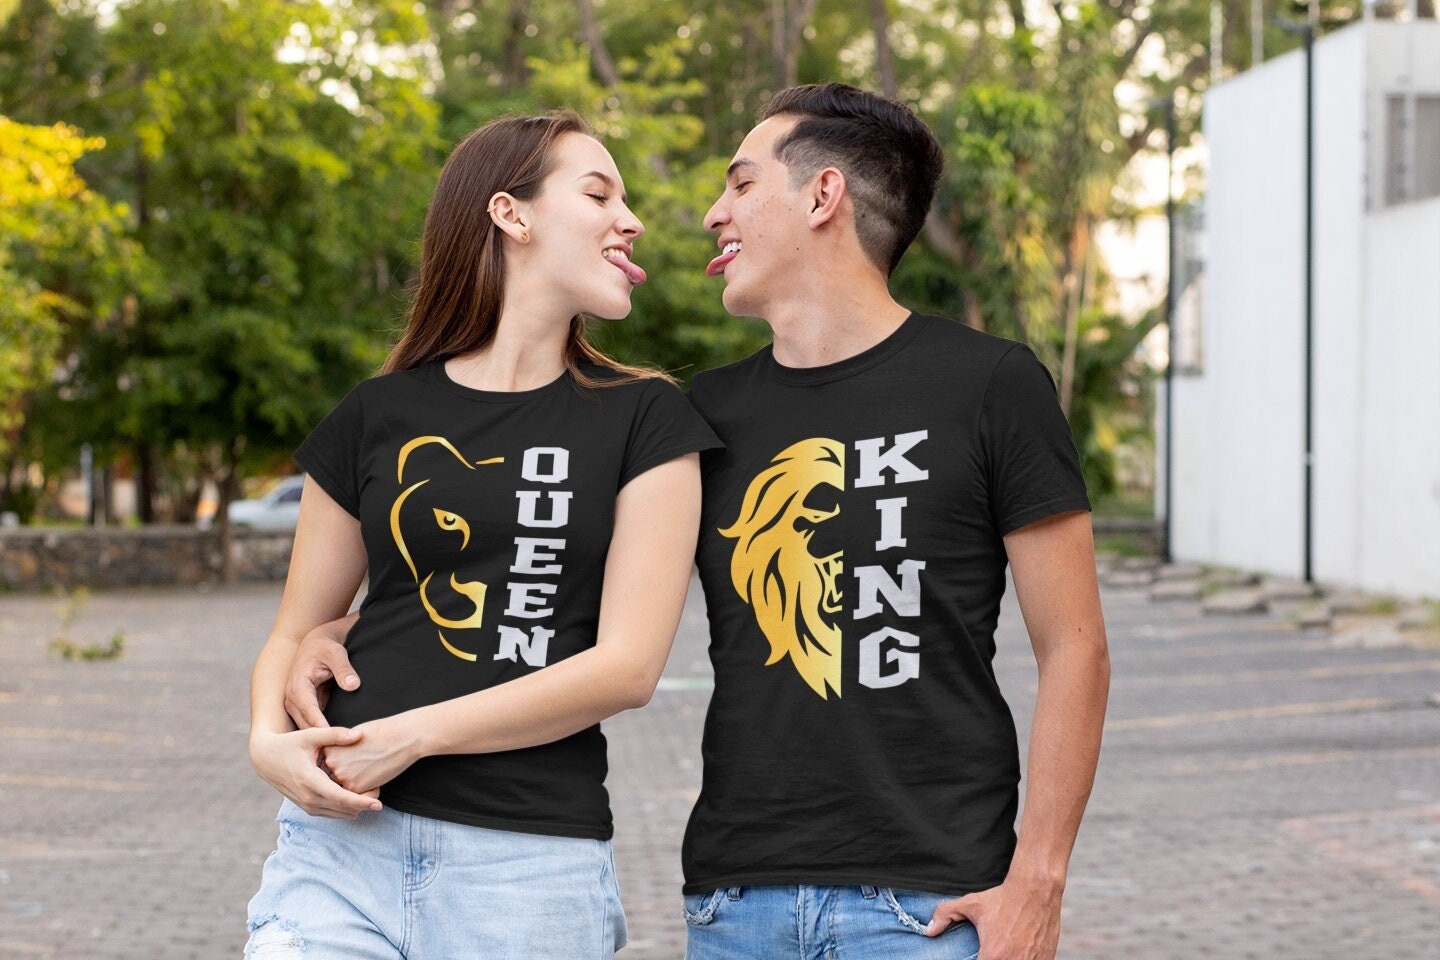 King & Queen - Couple Cotton Jerseys – Couples Apparel